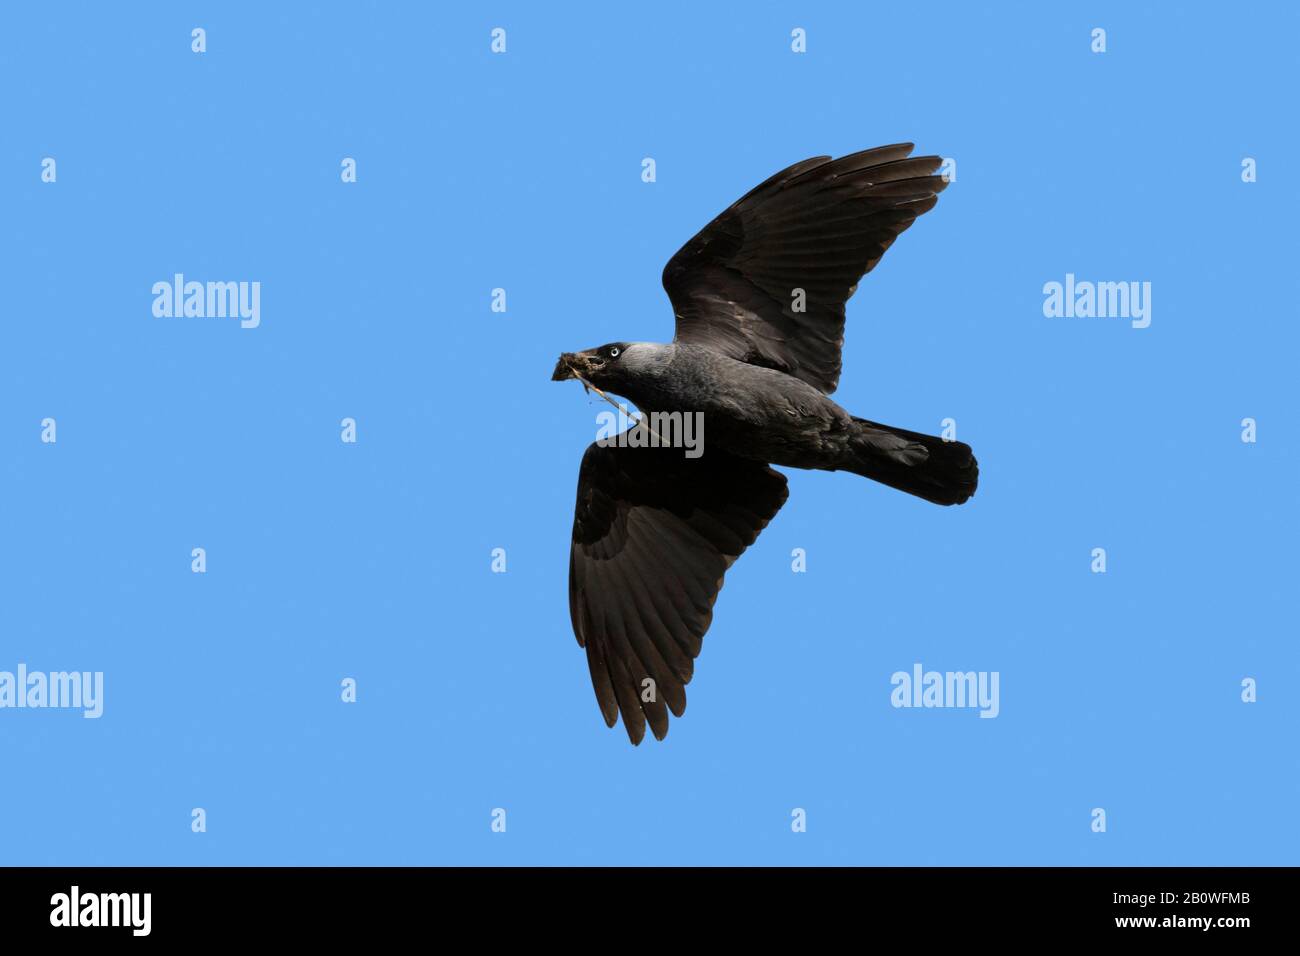 Western jackdaw / European jackdaw (Corvus monedula / Coloeus monedula) with nesting material in beak flying against blue sky in spring Stock Photo